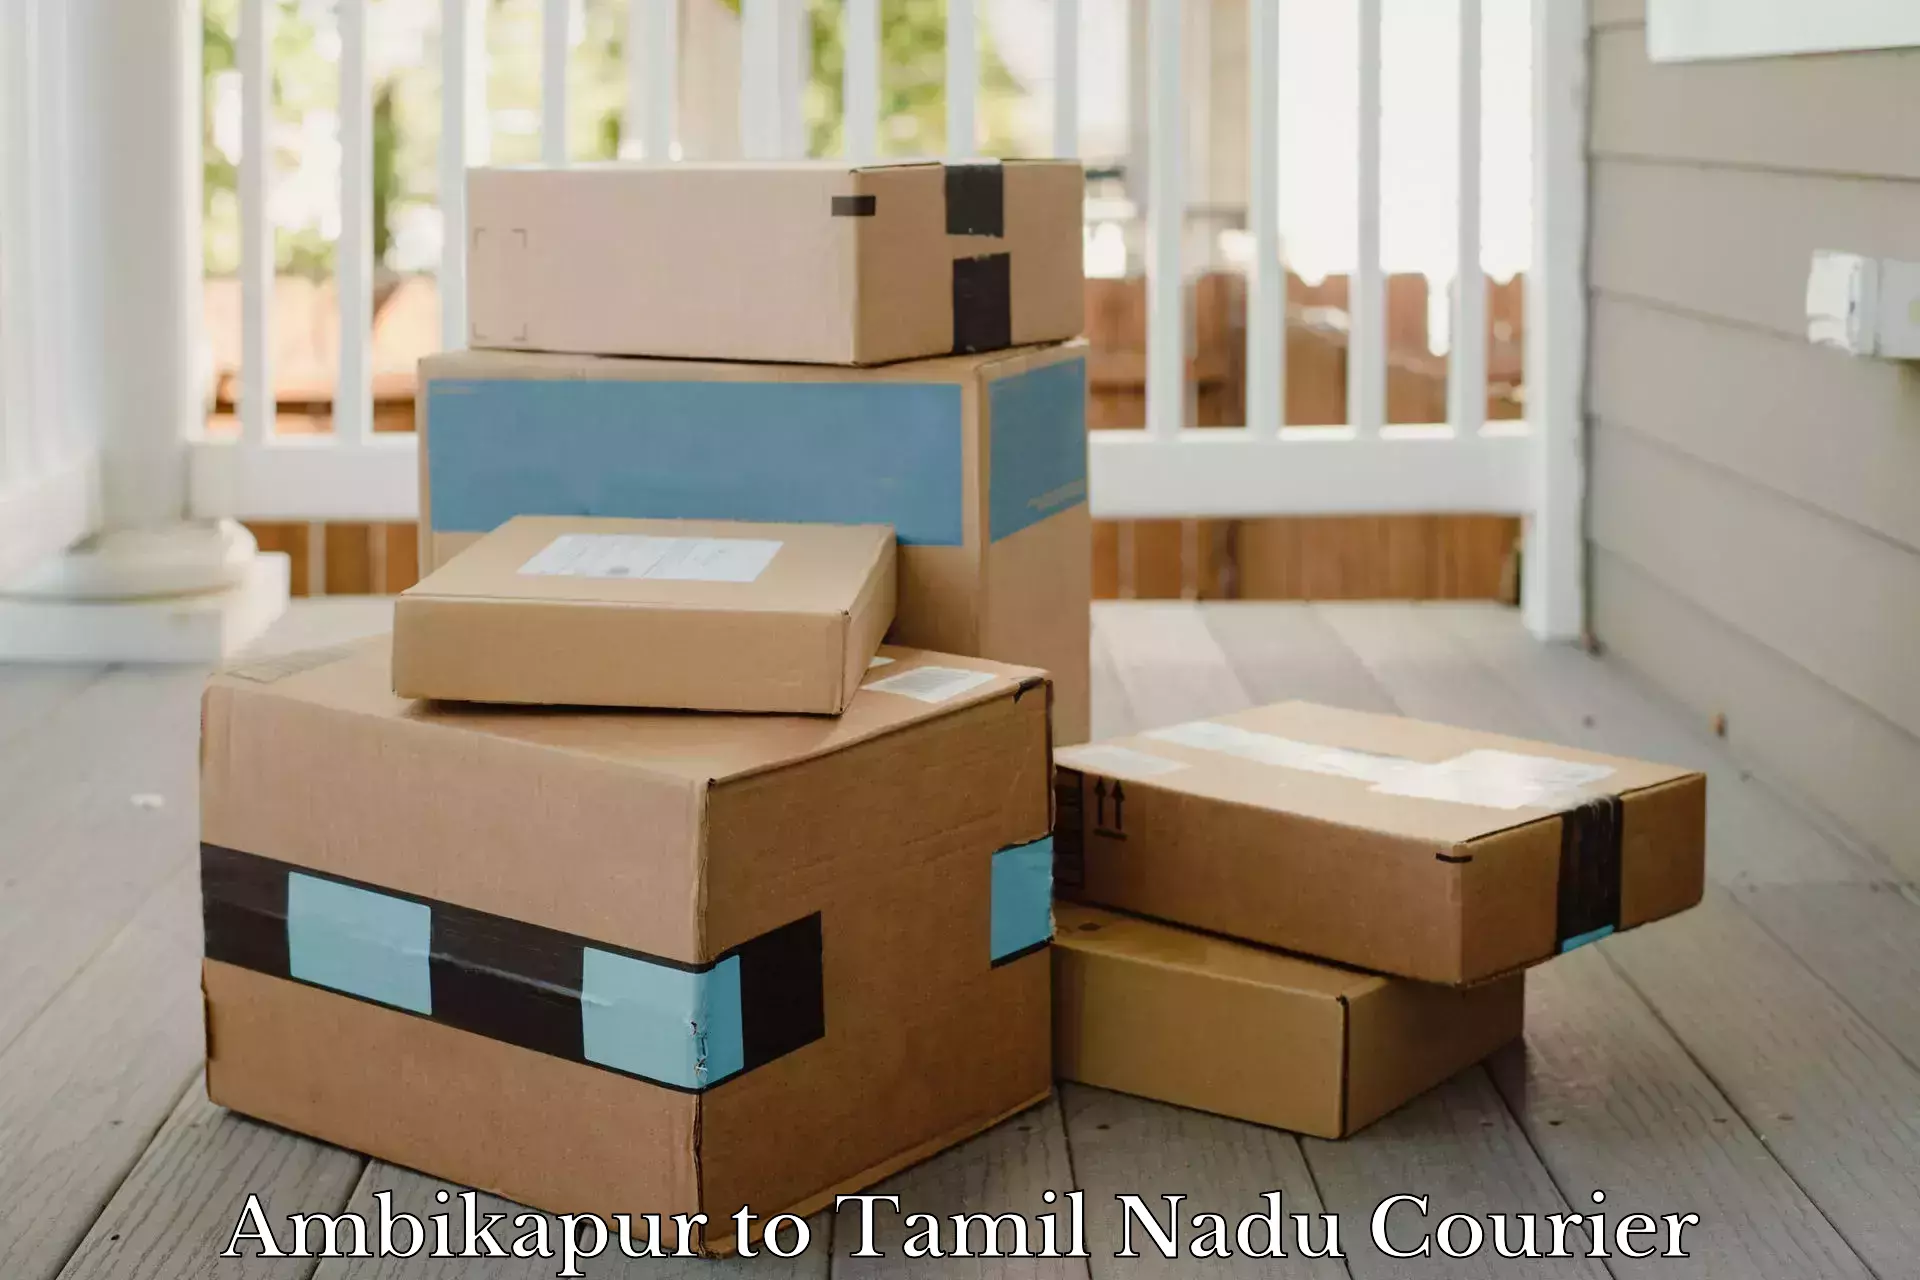 Supply chain efficiency Ambikapur to Tamil Nadu